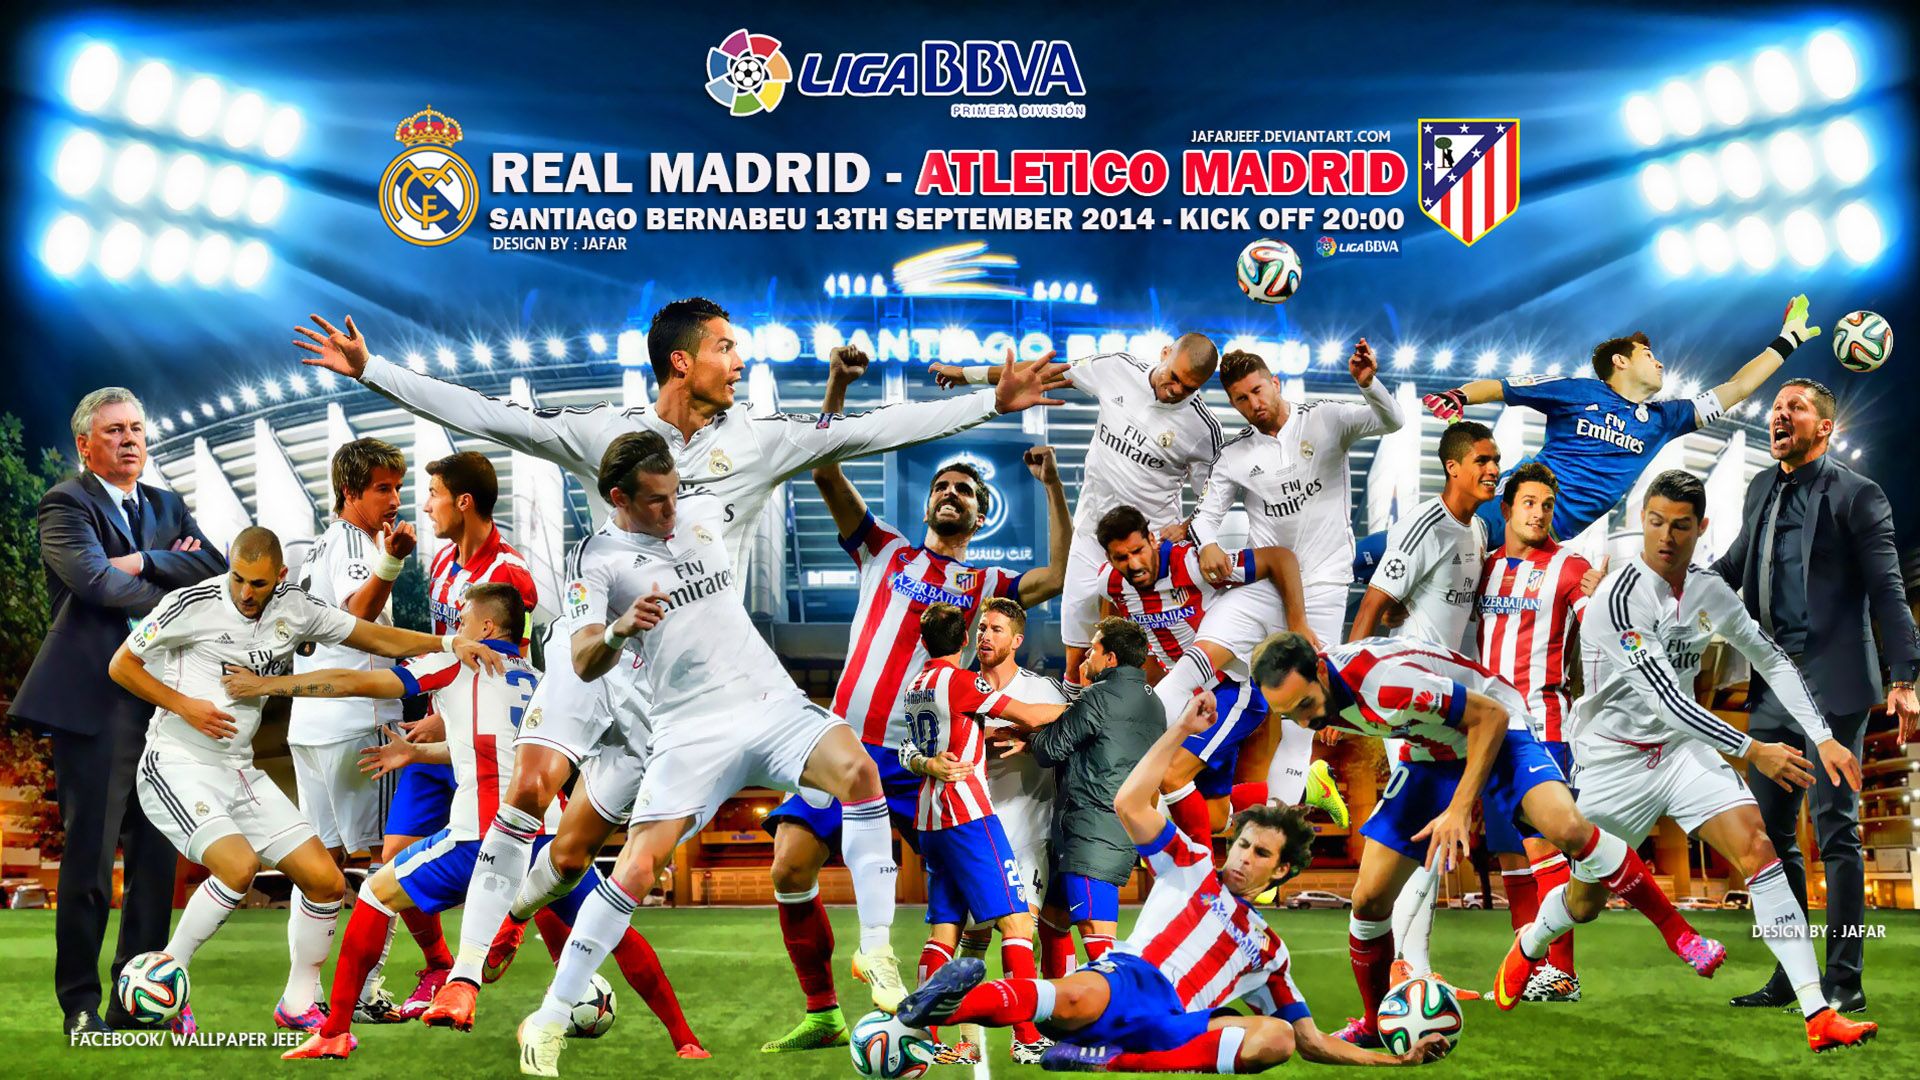 Real Madrid V Atletico Liga Bbva Wallpaper Wide Or